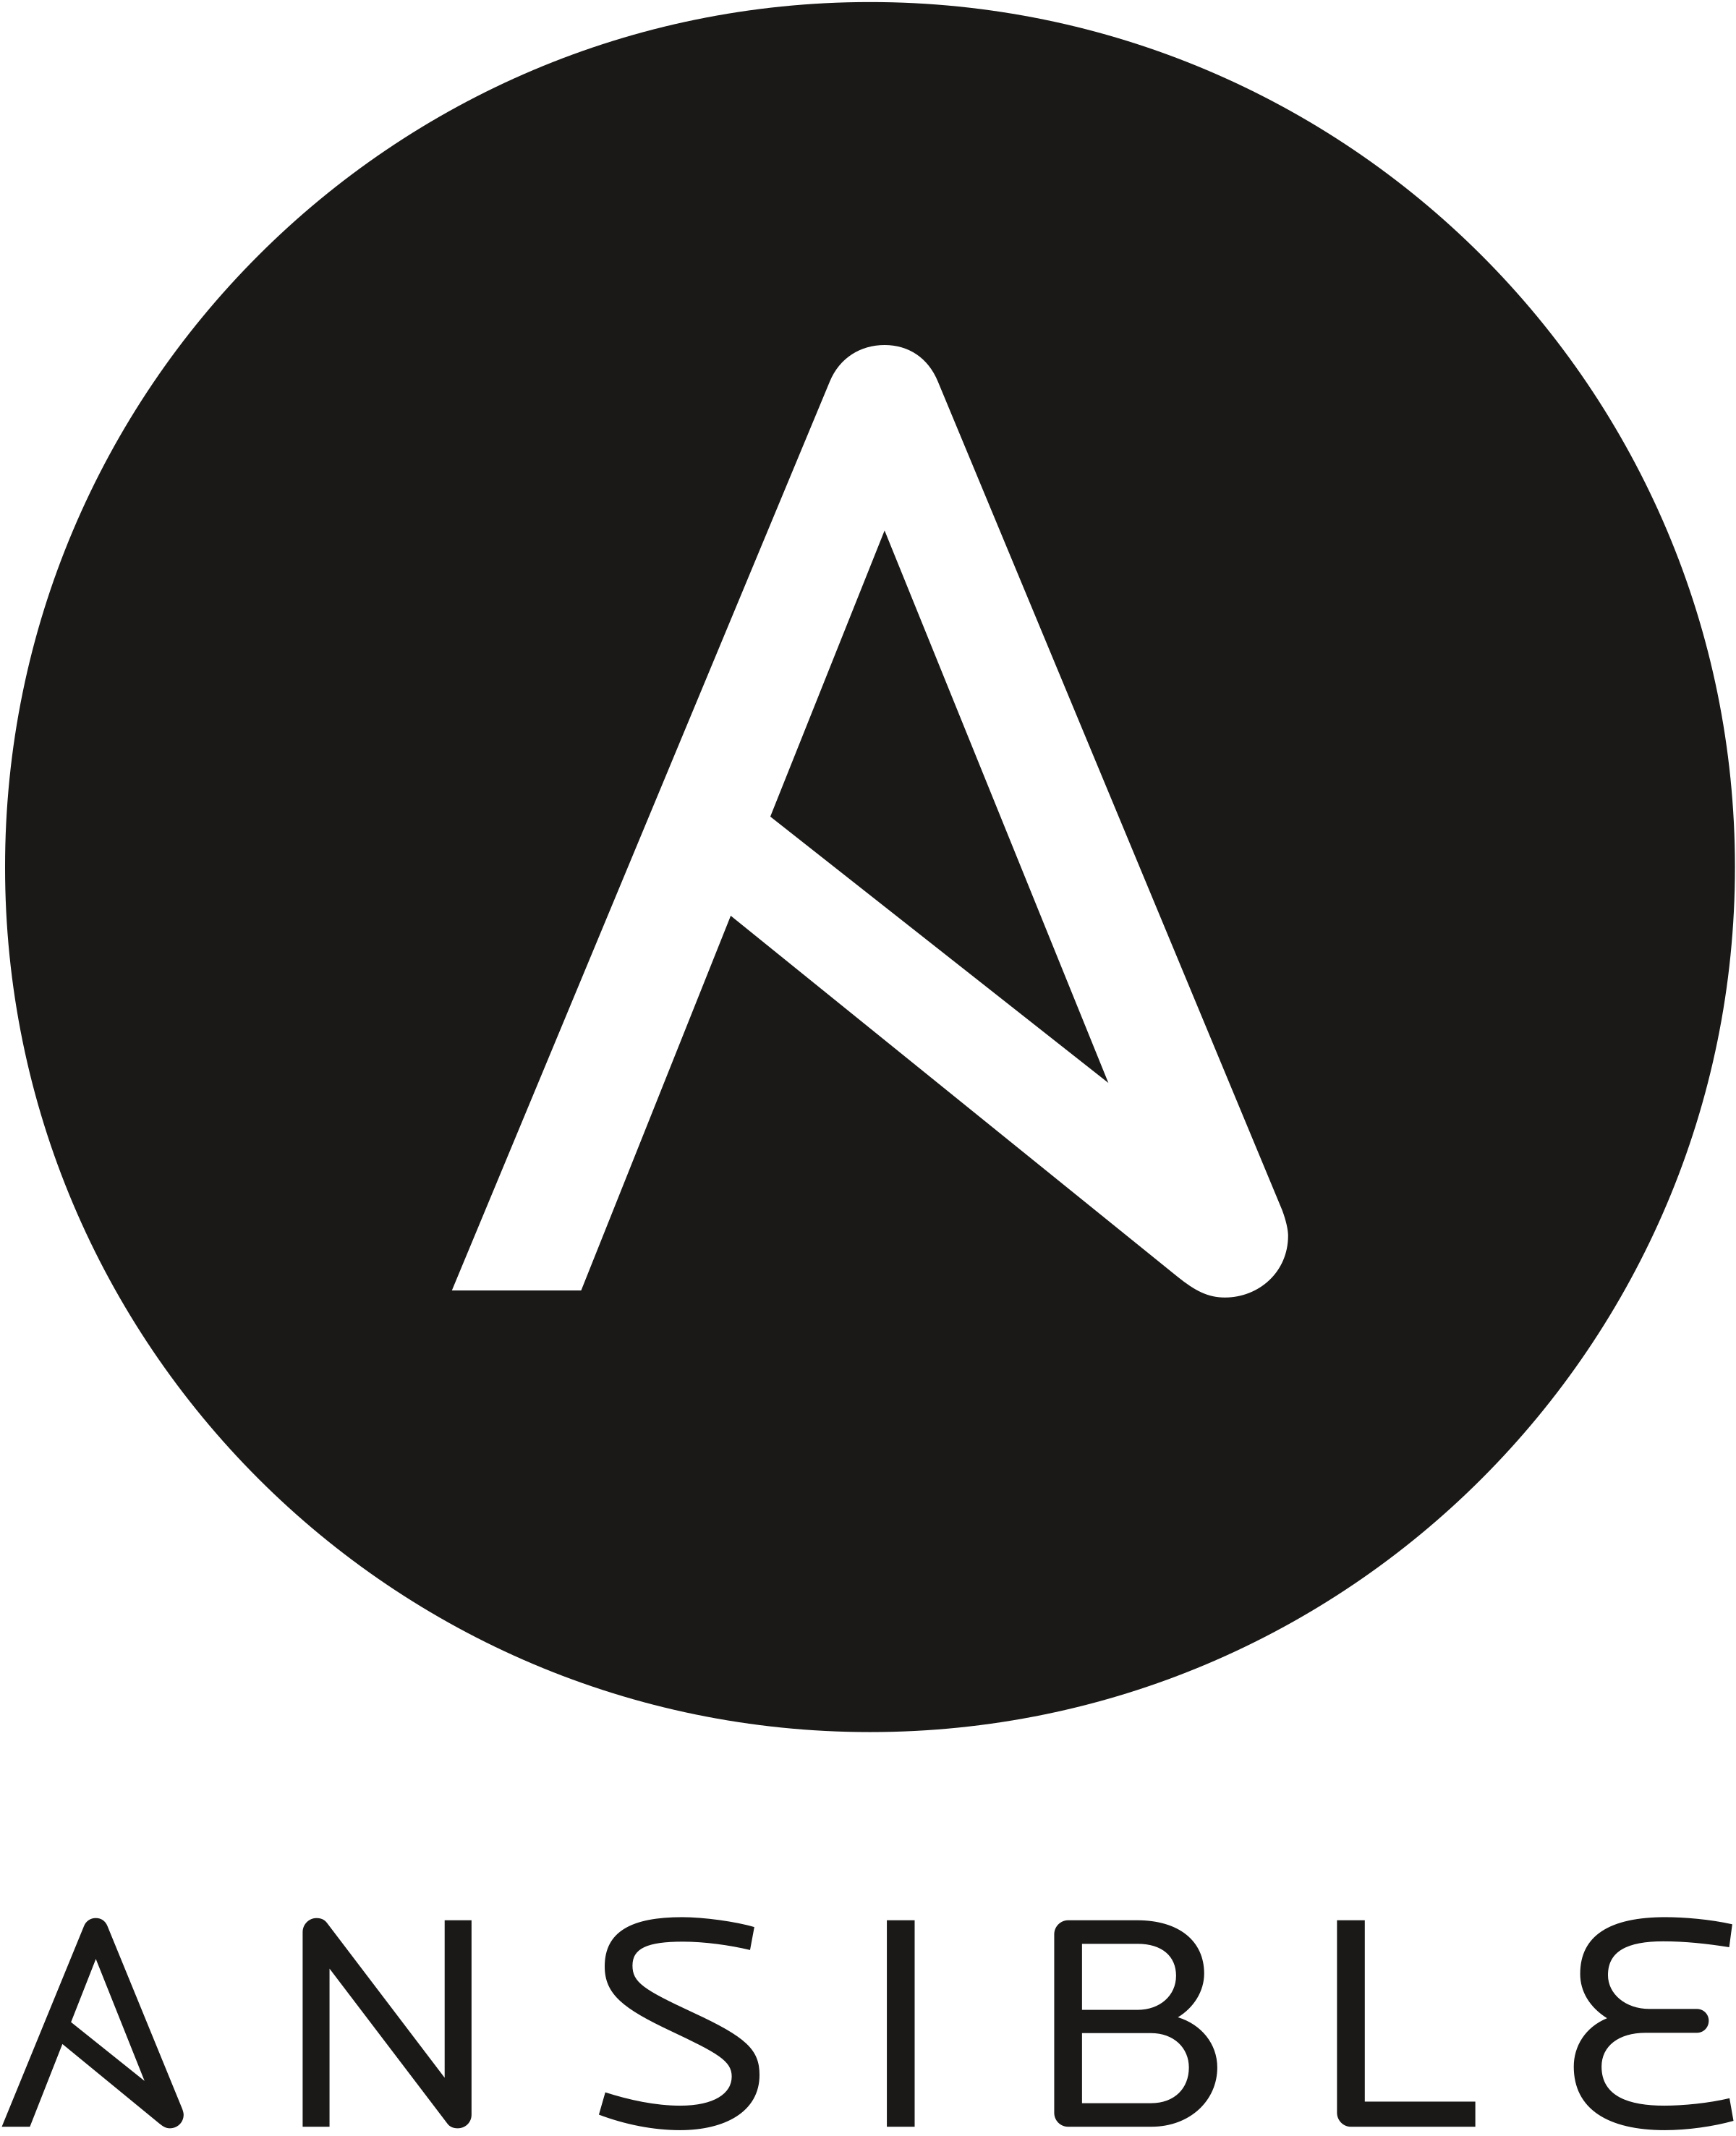 ansible-logo-png-transparent.png